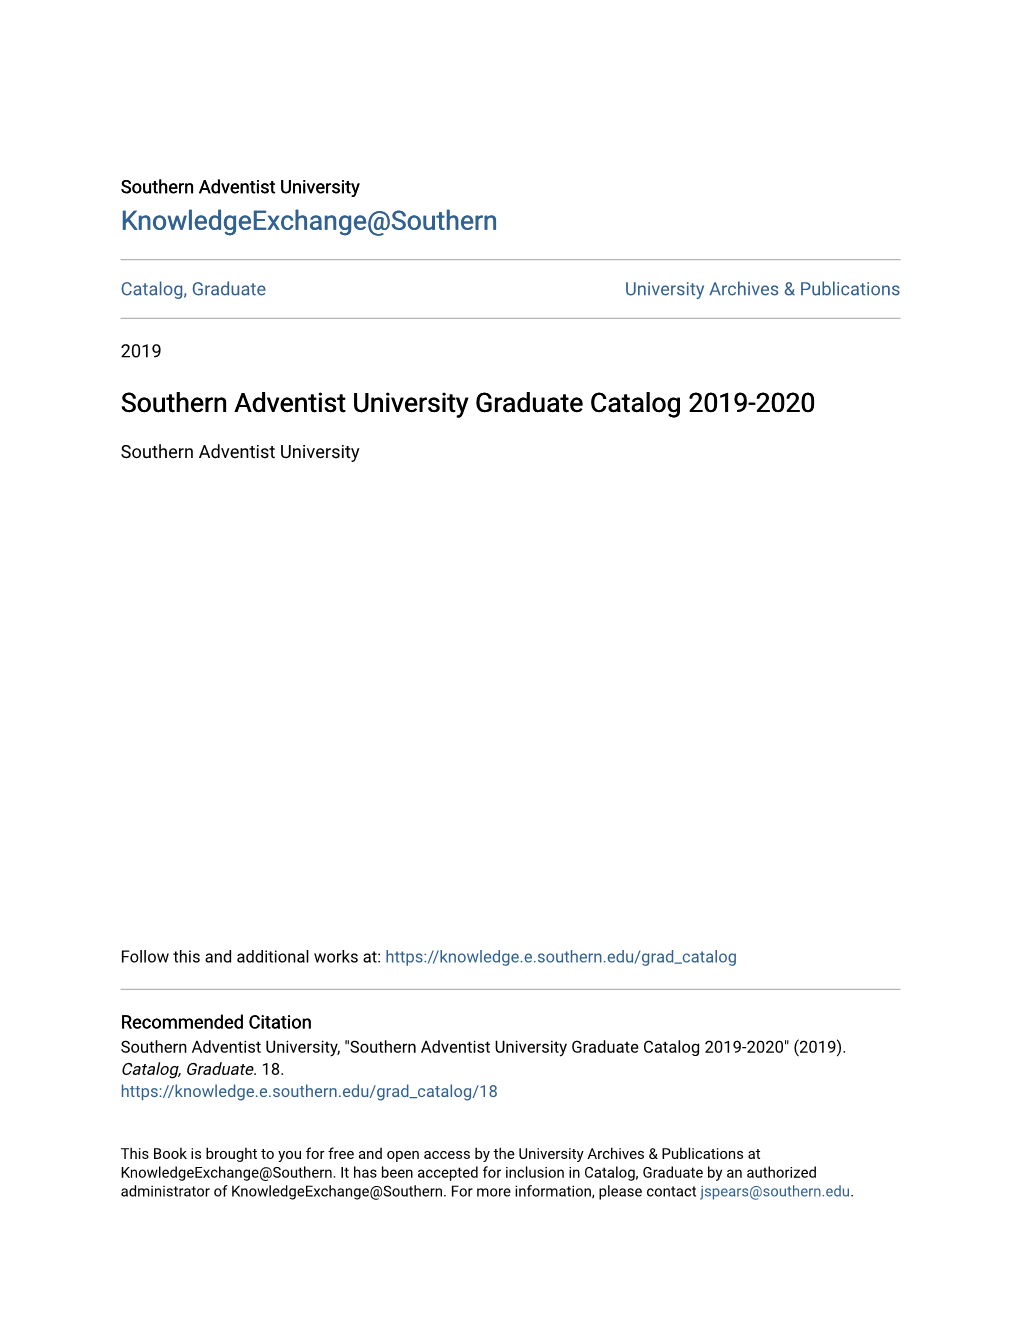 Southern Adventist University Graduate Catalog 2019-2020